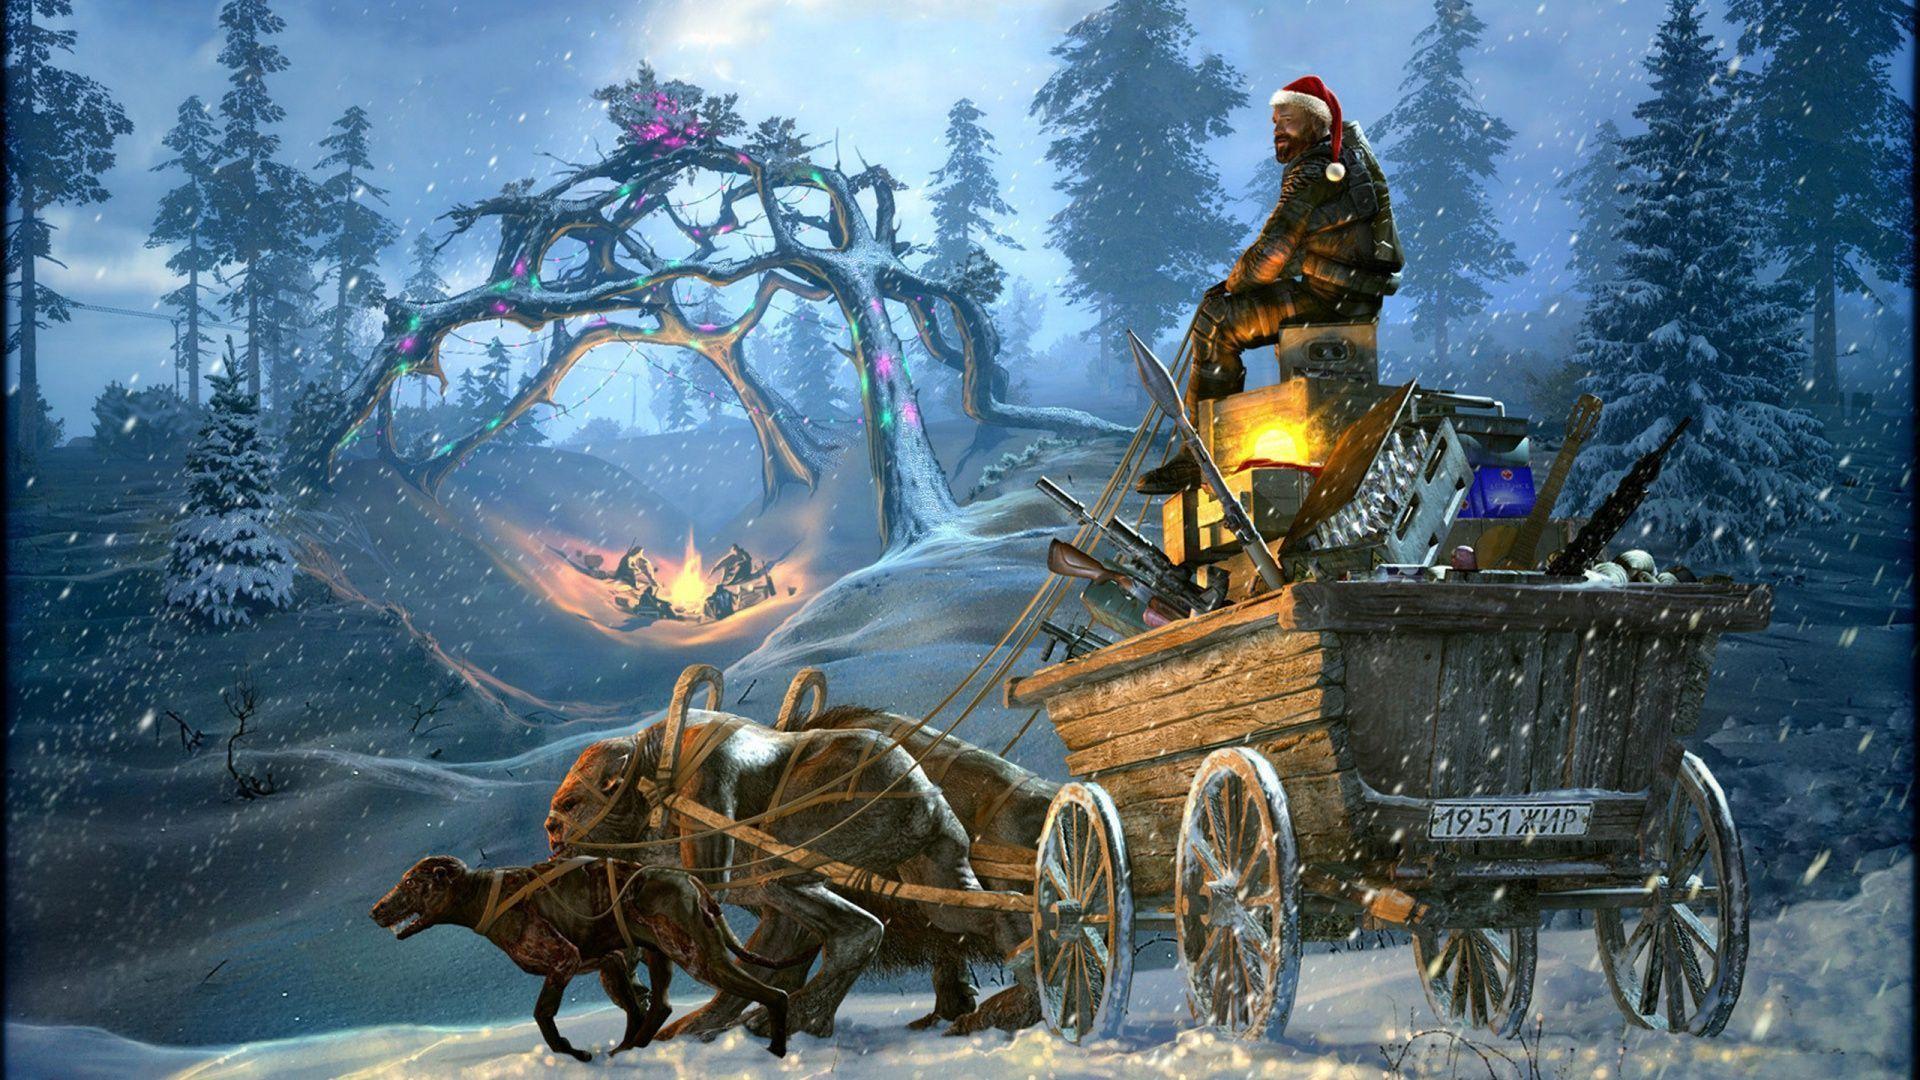 Underworld Christmas background in 1920x1080 resolution. HD